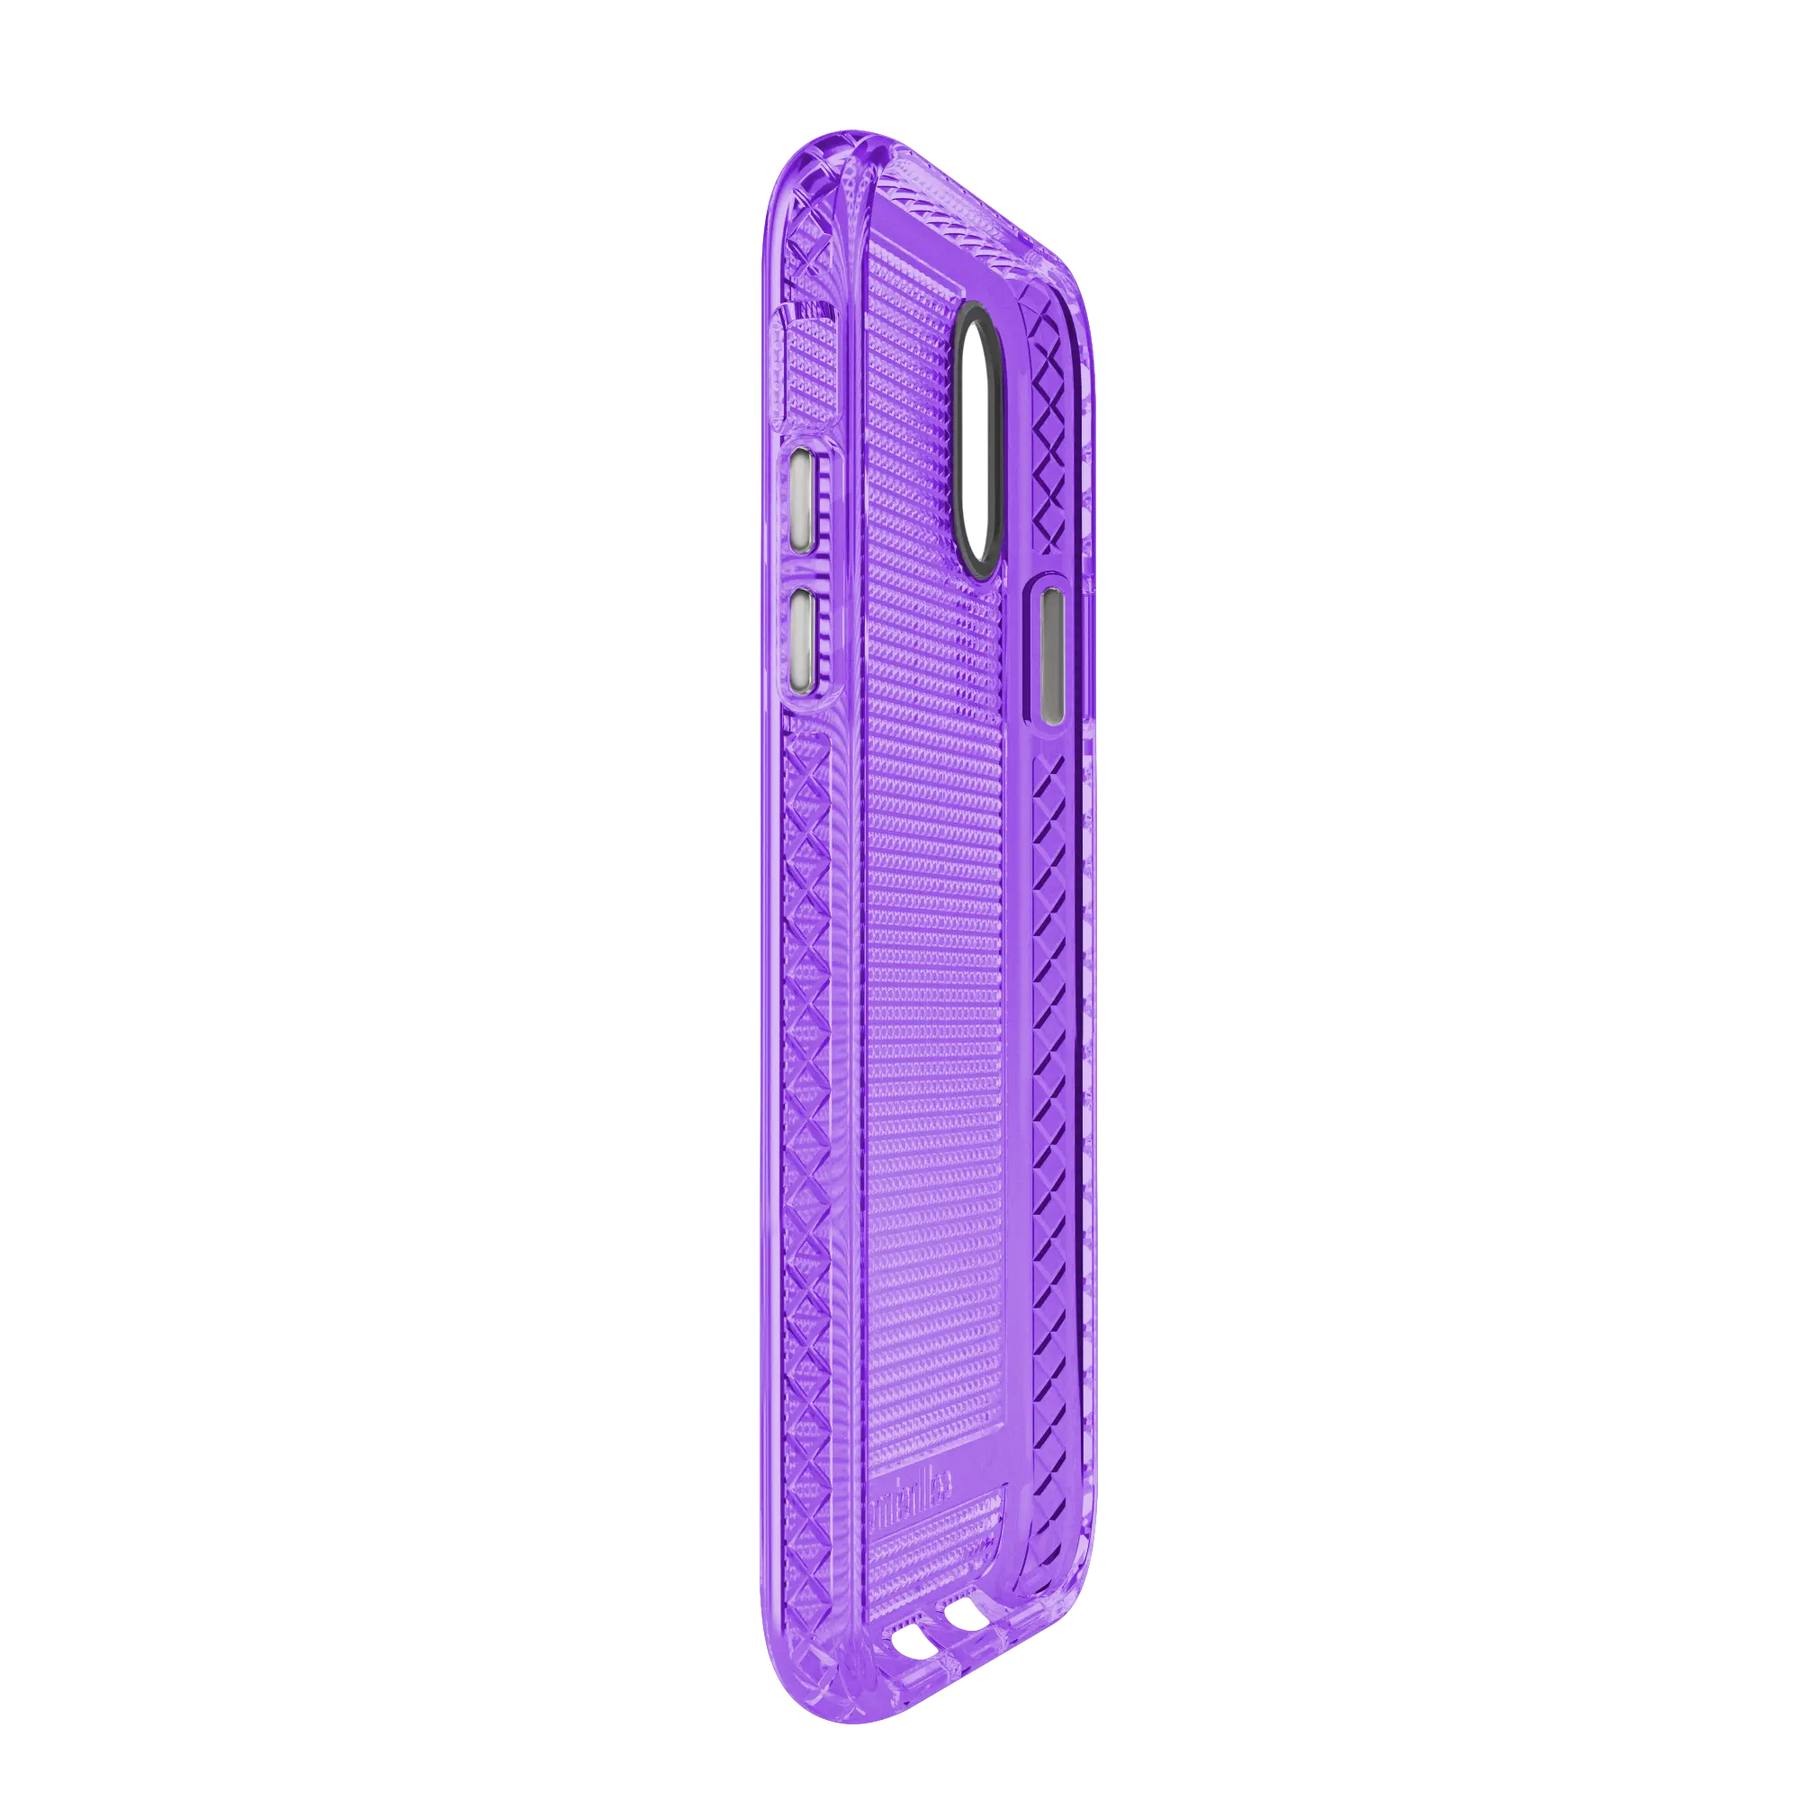 Altitude X Series for Apple iPhone XR  - Purple - Case -  - cellhelmet